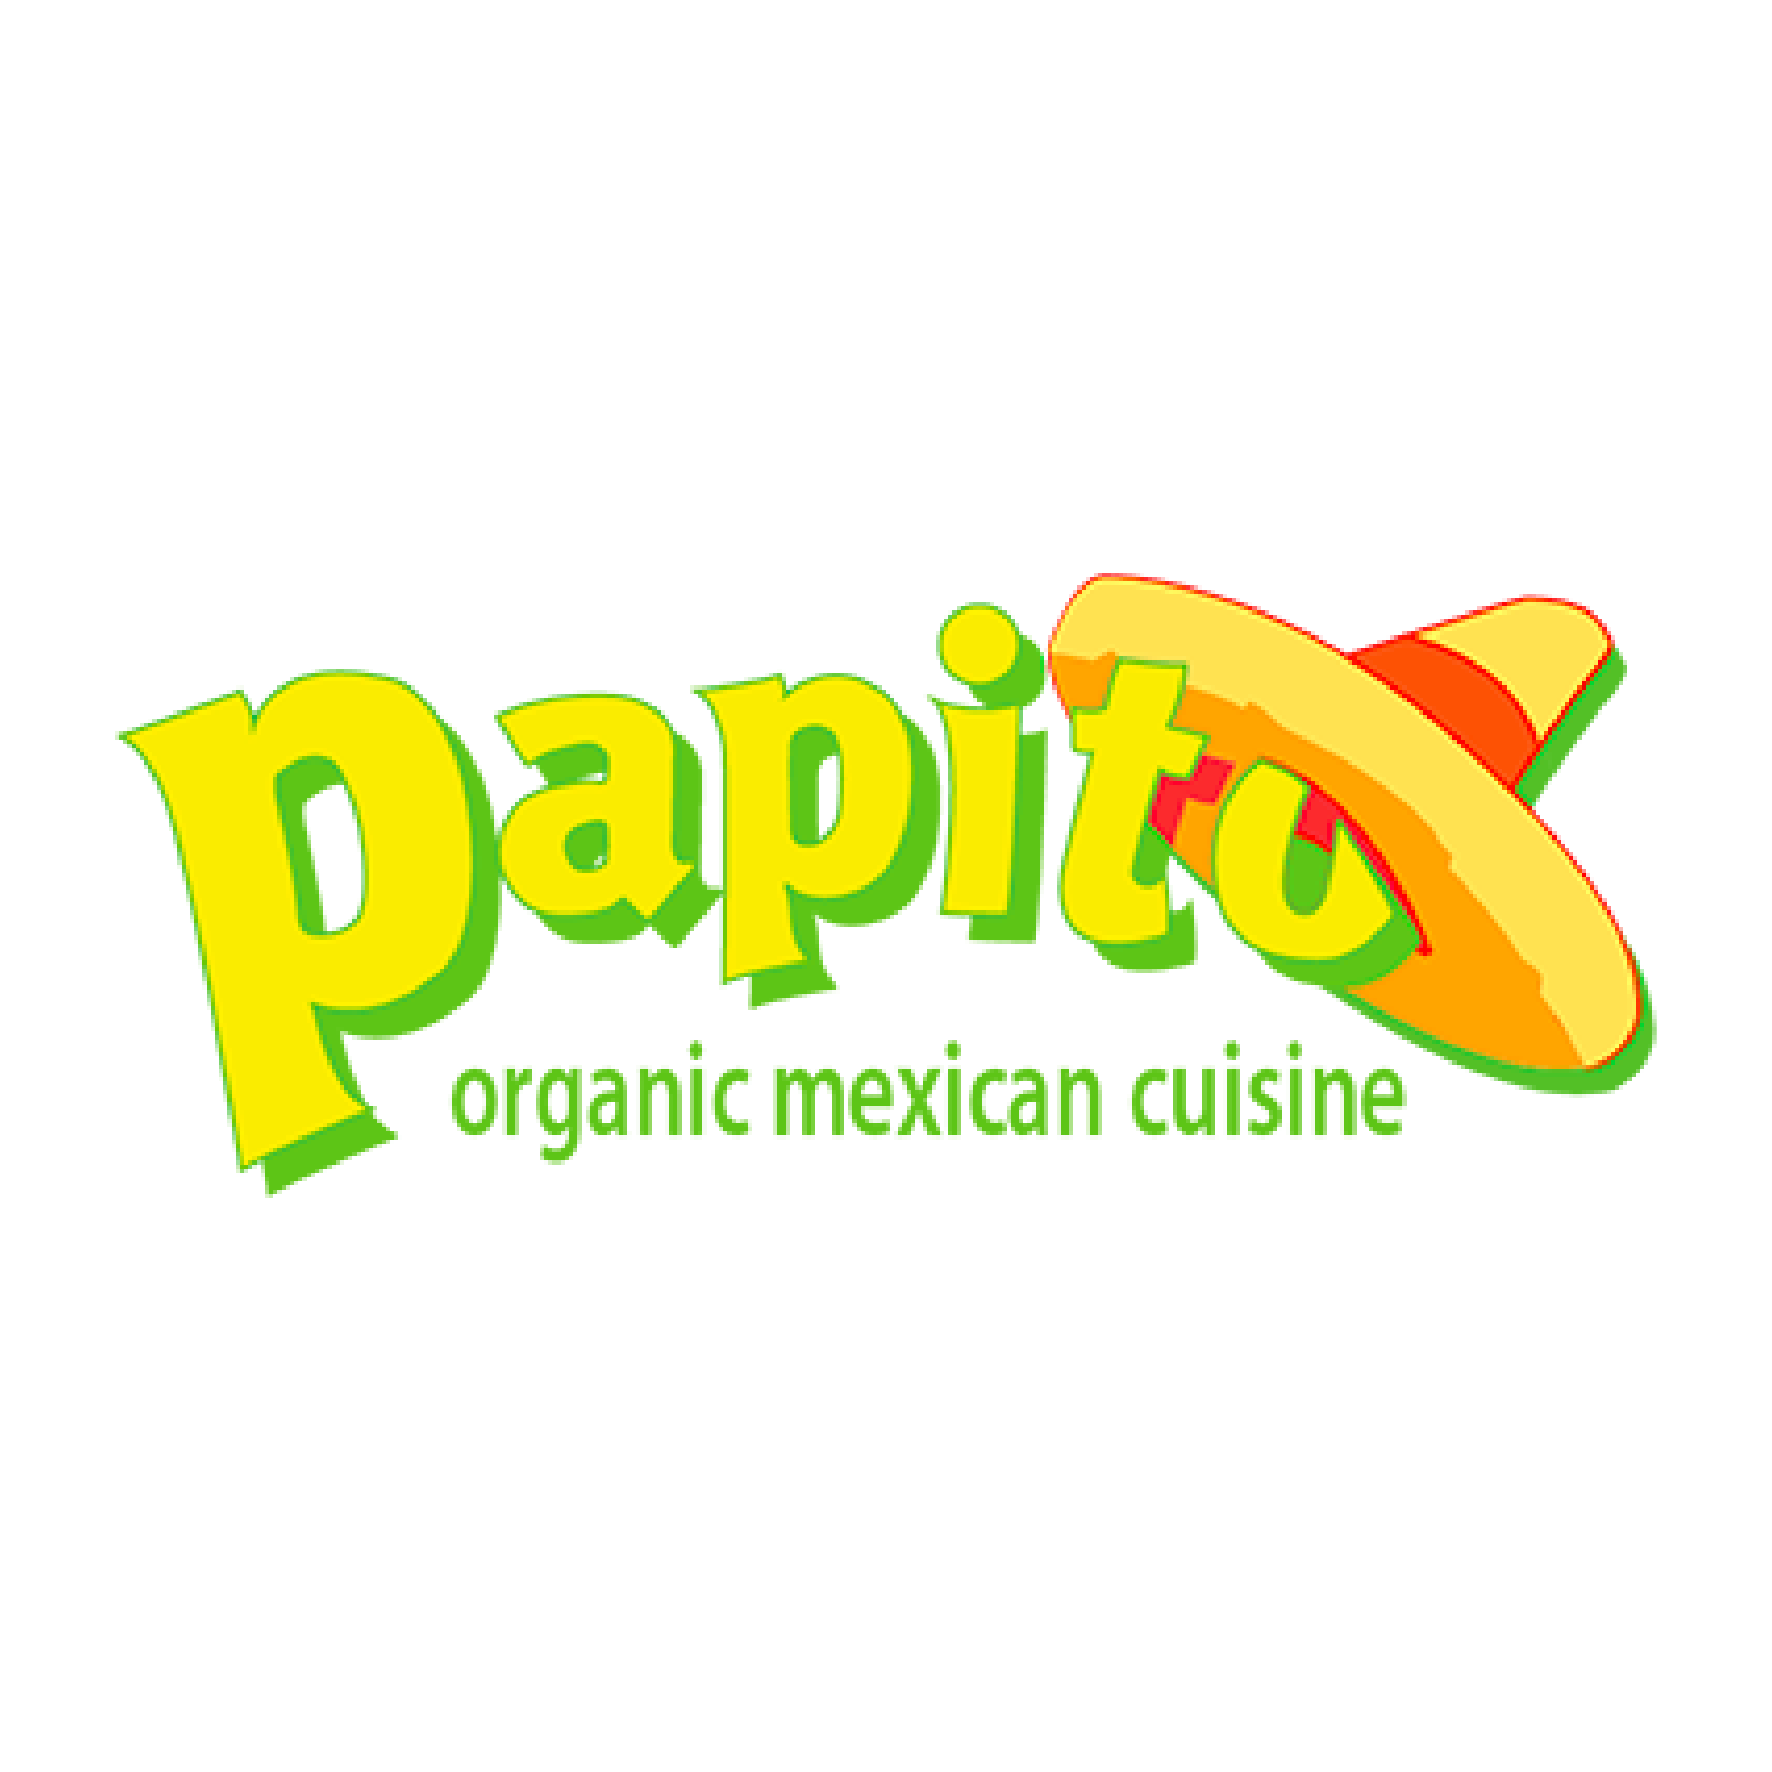 Papito Organic Mexican Cuisine Logo